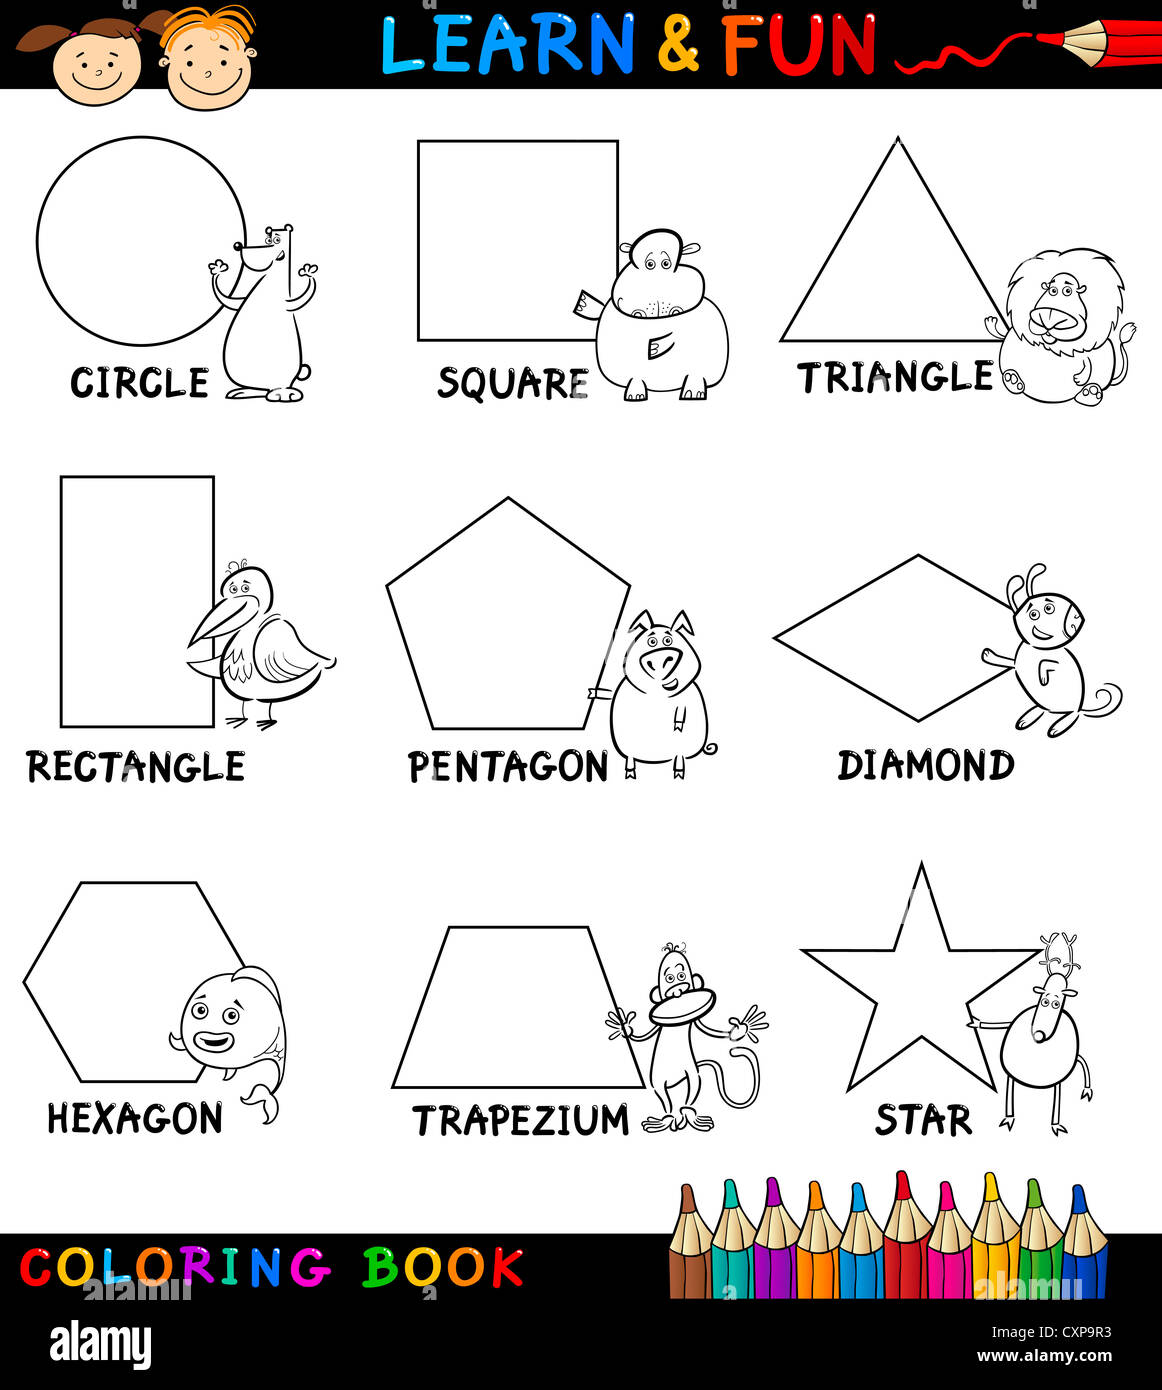 Geometric shapes - As formas geométricas em inglês - Inglês